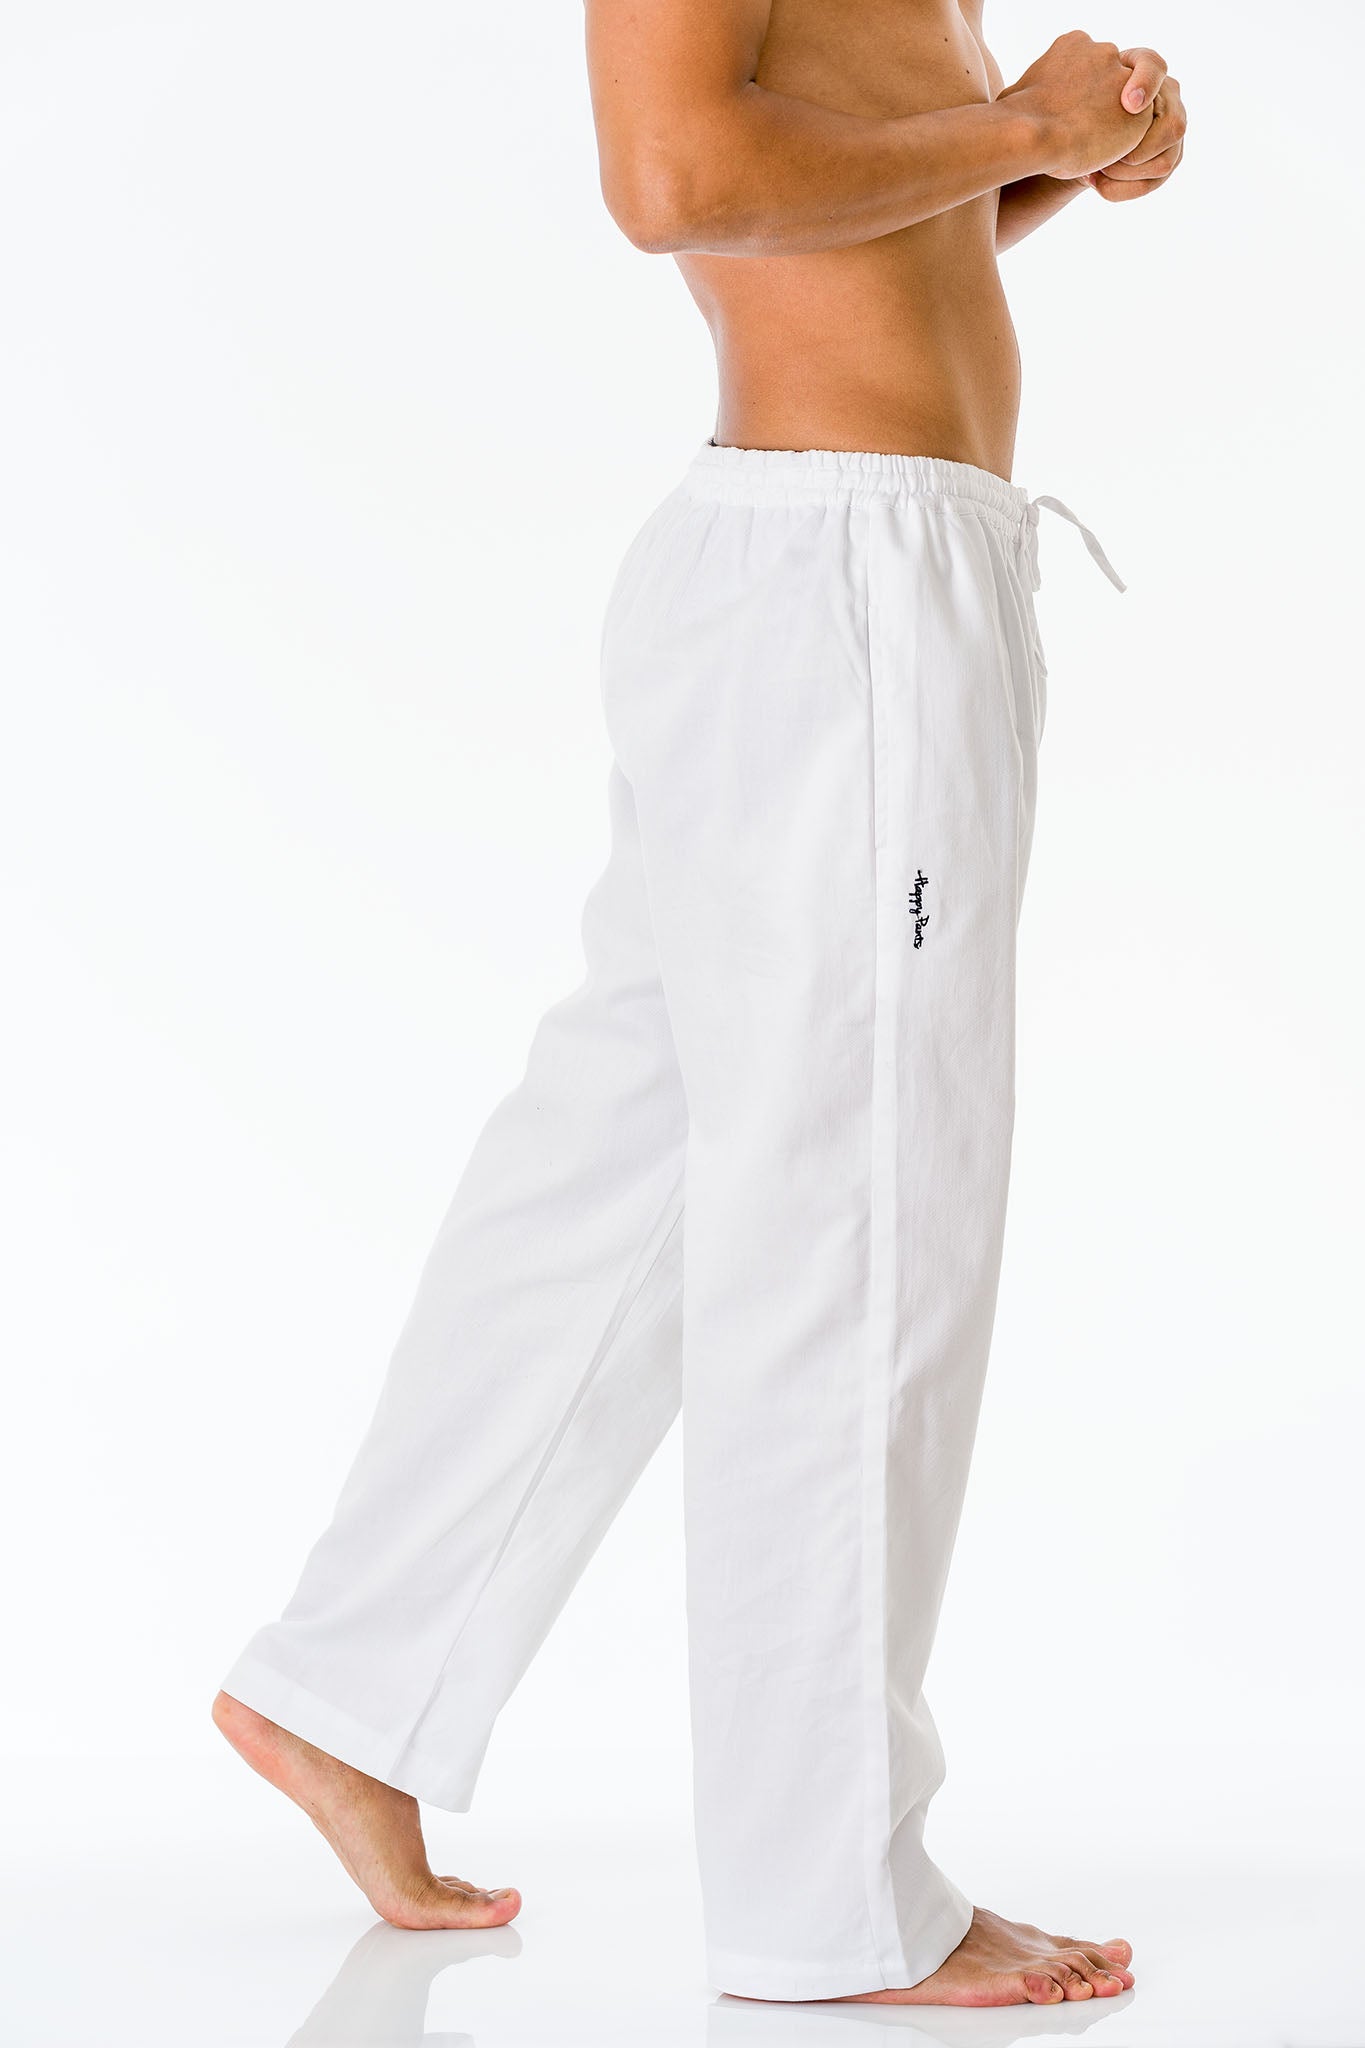 White cotton pants for men